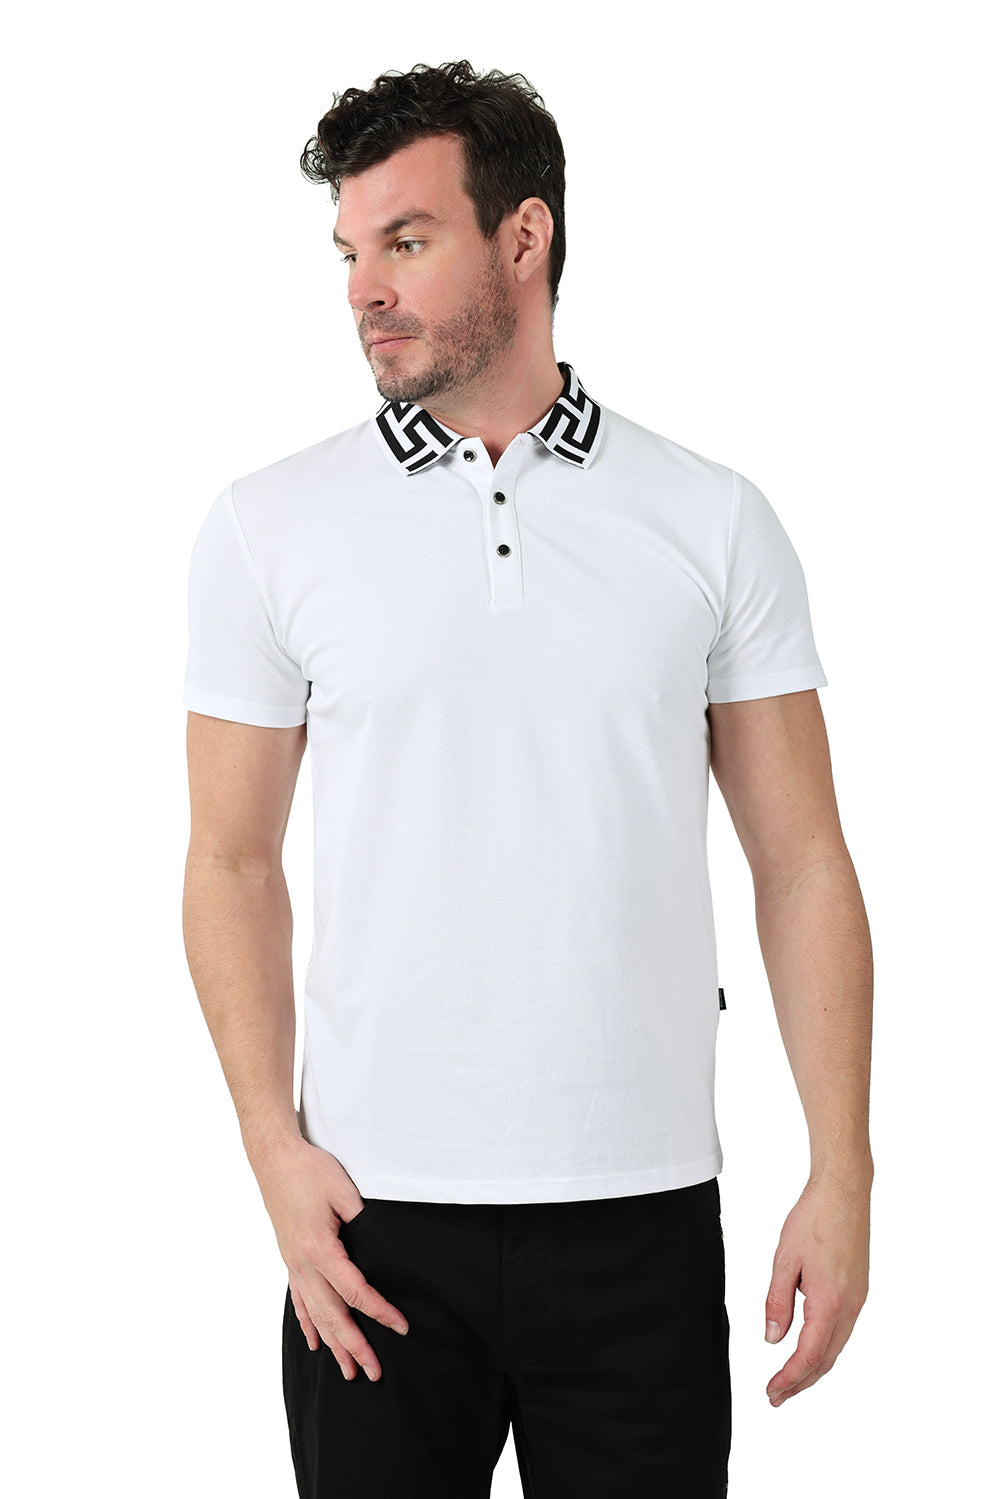 Barabas Men's Greek Key Printed Pattern Designer Polo Shirts PS121 White Black